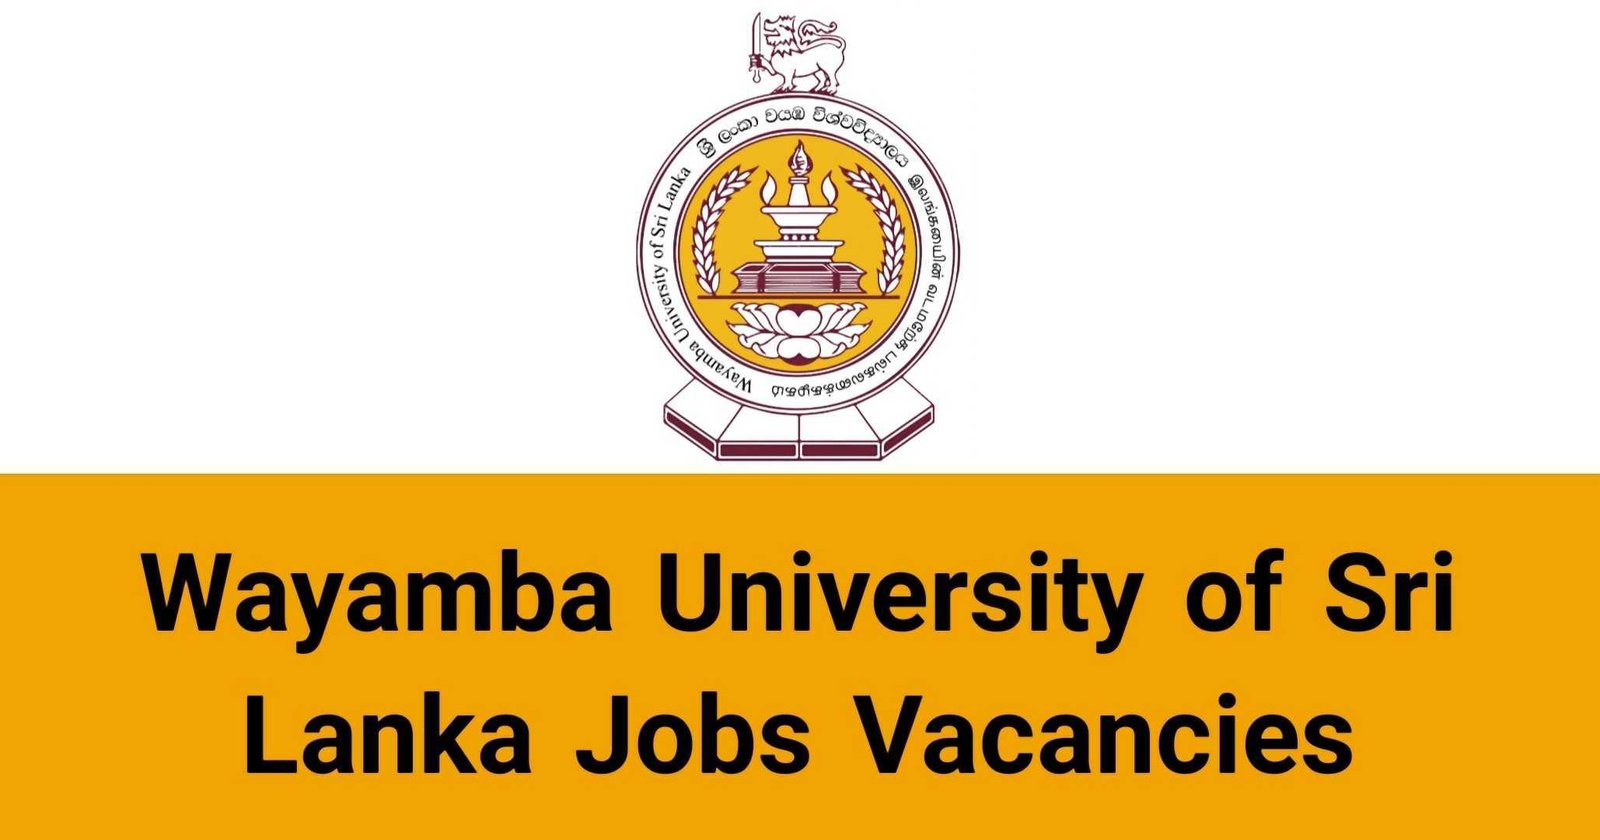 Wayamba University of Sri Lanka Jobs Vacancies Applications